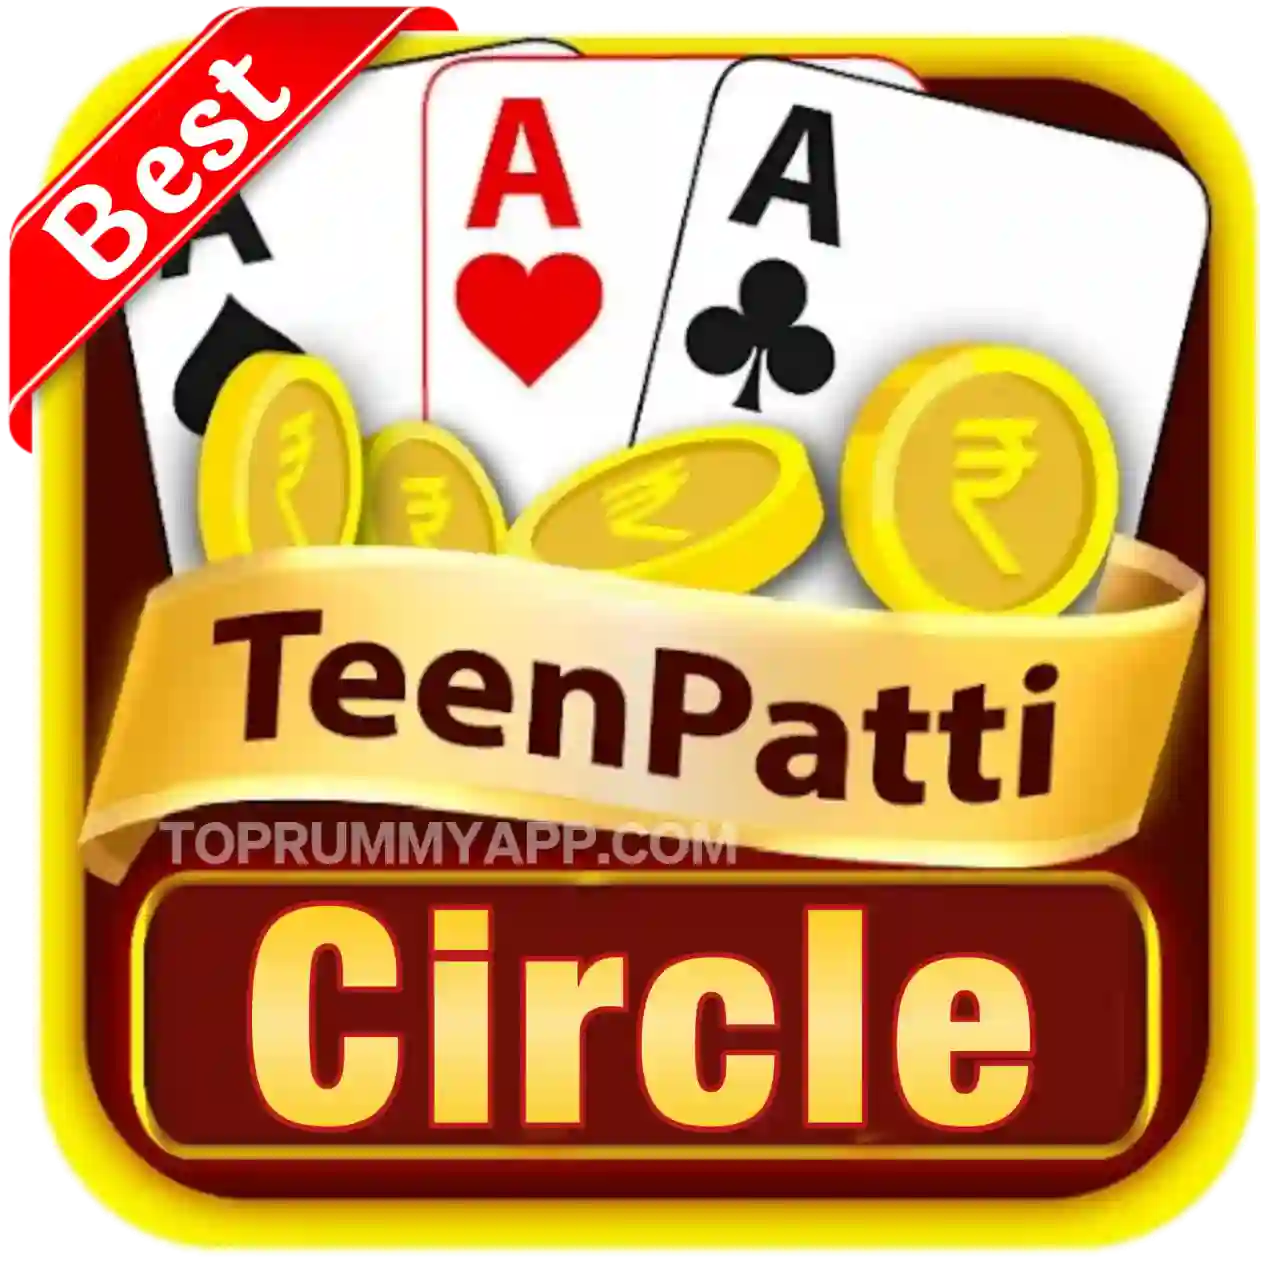 Teen Patti Circle App Download Top Rummy App List ₹51 Bonus